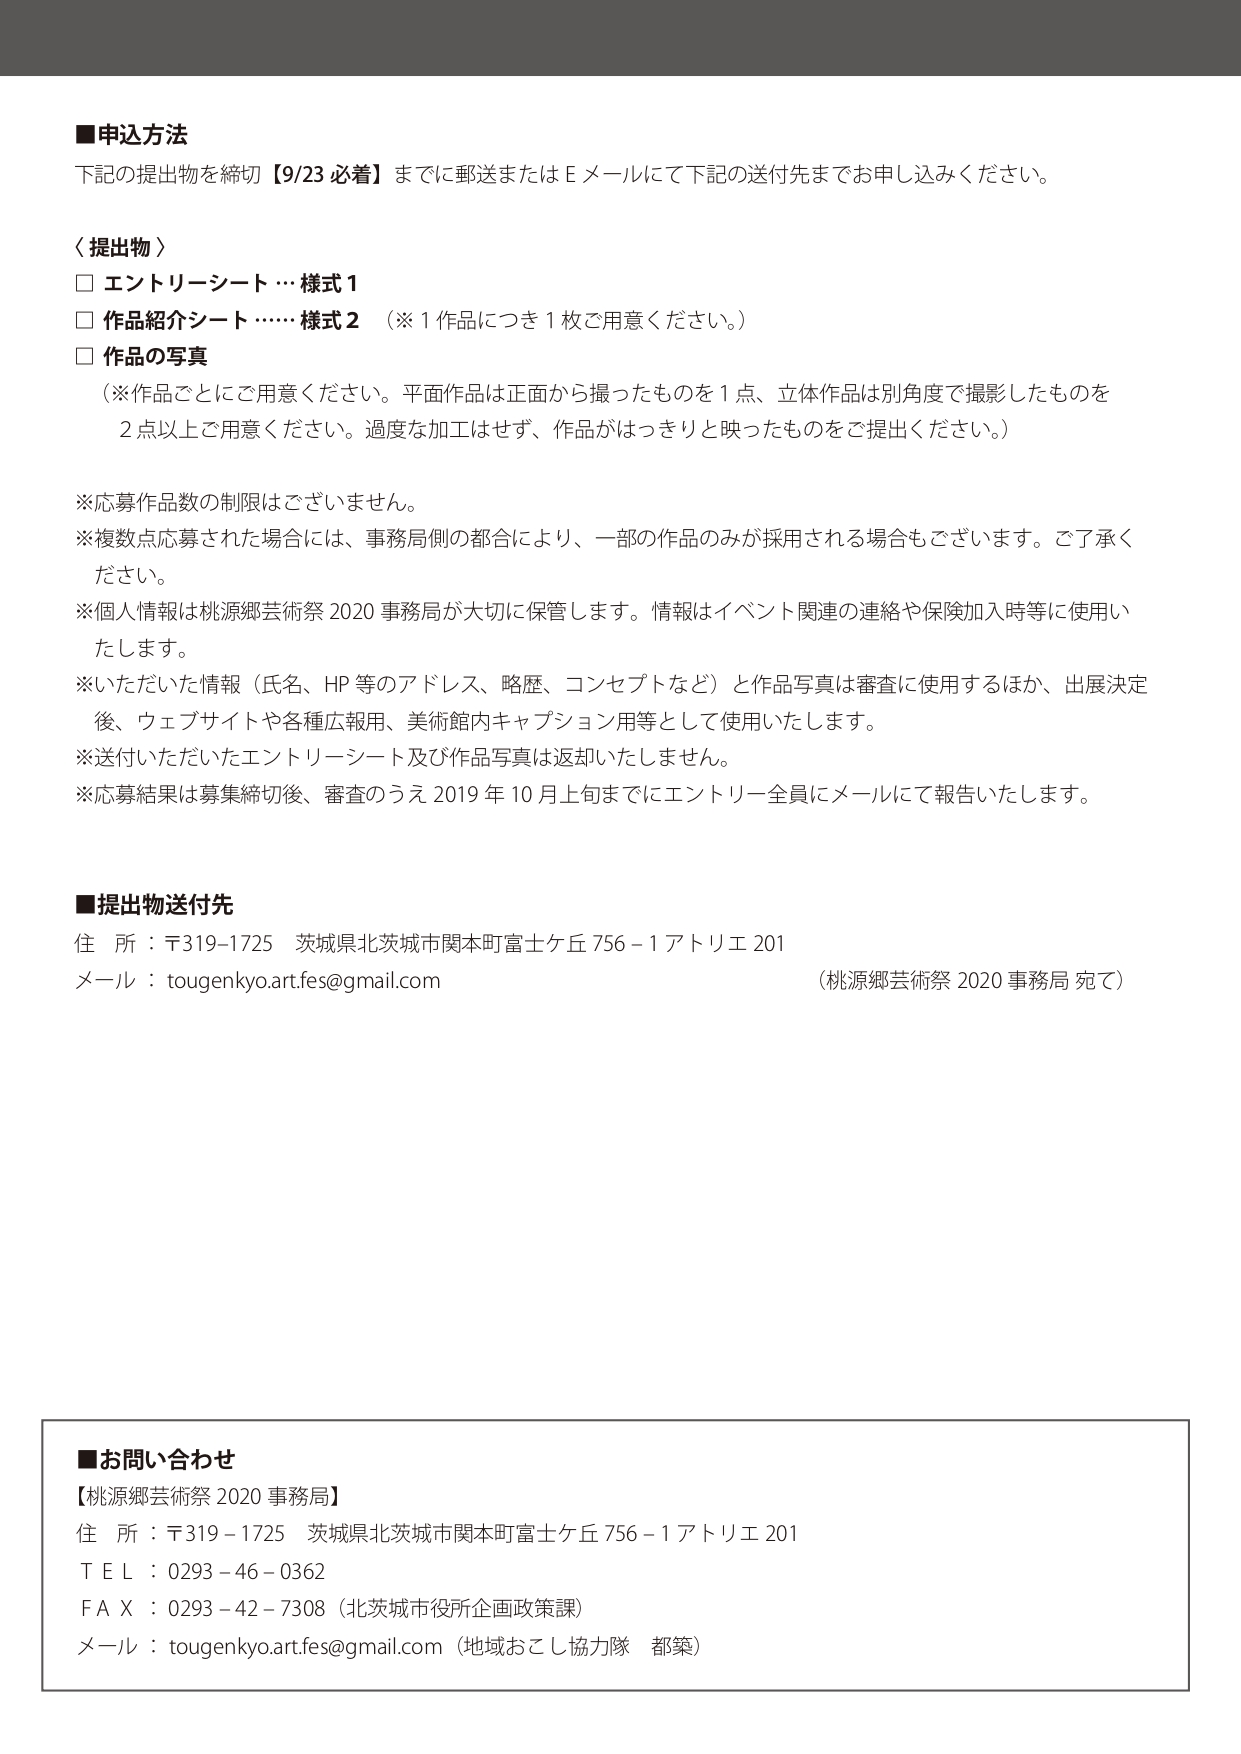 01_美術館展示アーティスト公募_募集要項(印刷版).jpg